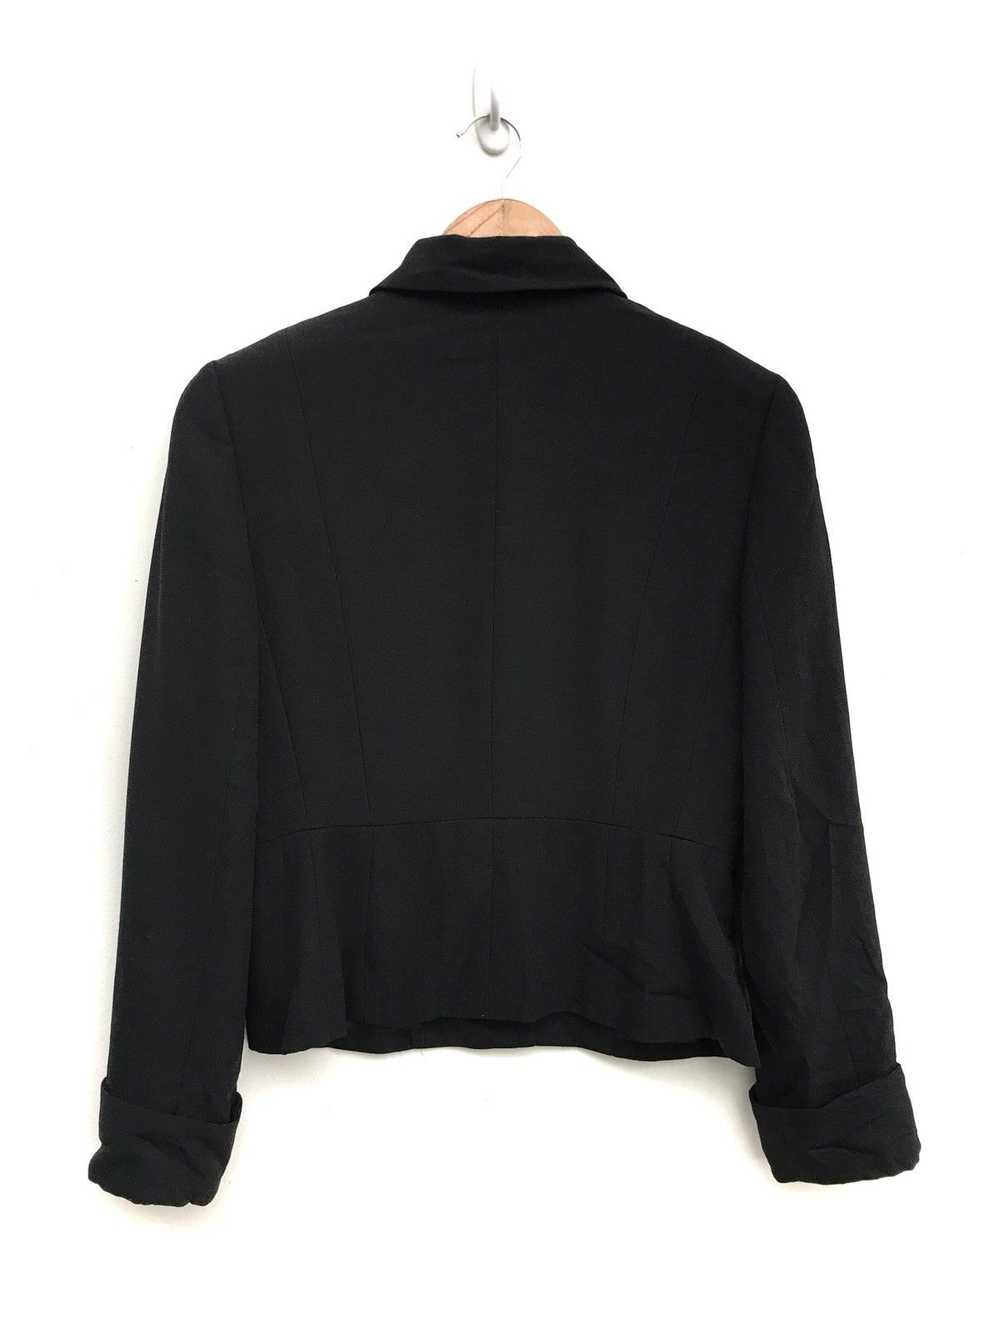 Balenciaga Balenciaga Black Coat Jacket - image 2